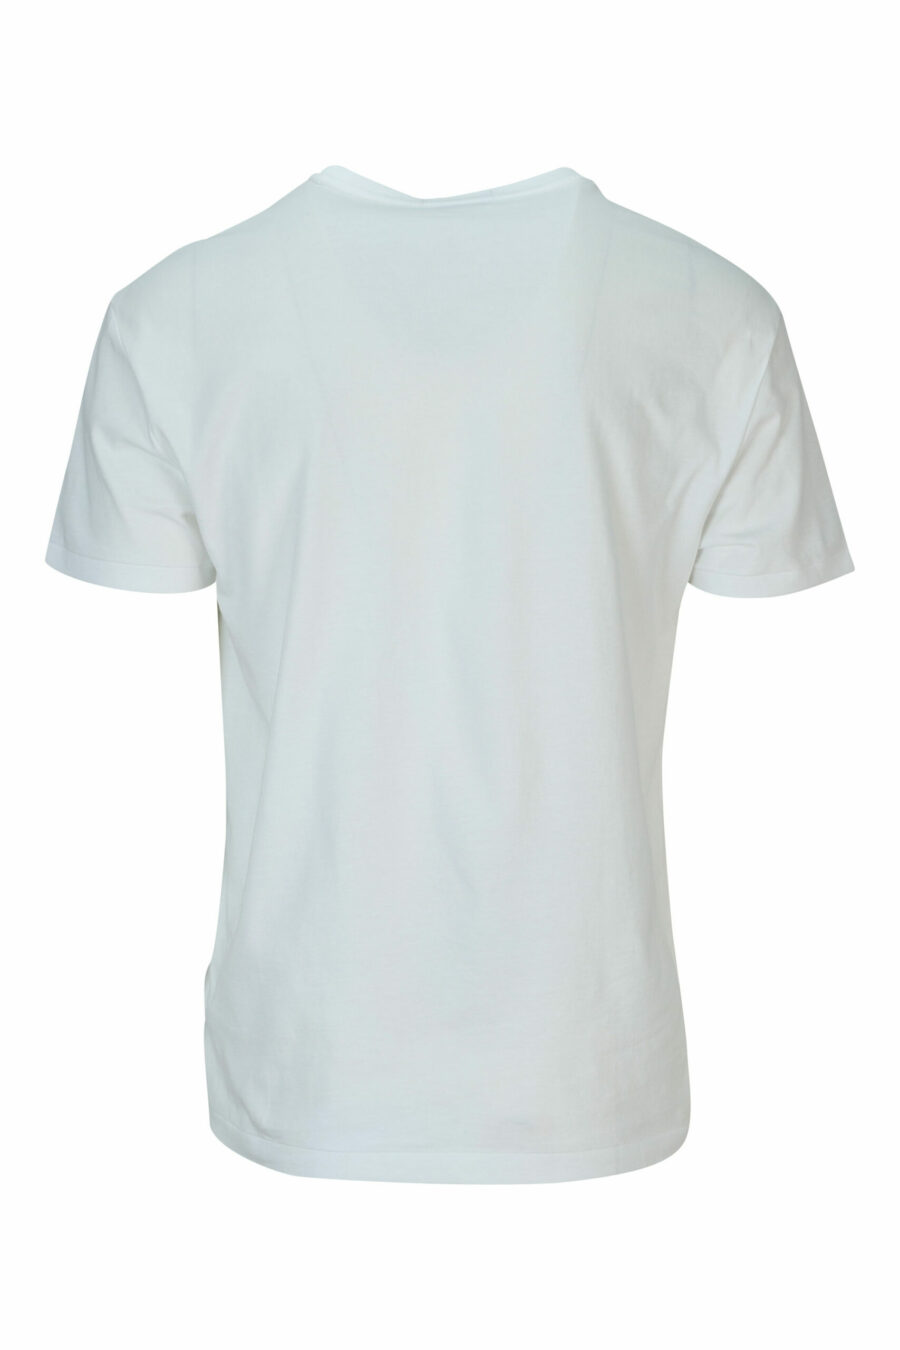 Camiseta blanca con maxilogo "polo" negro - 3616536391115 1 scaled